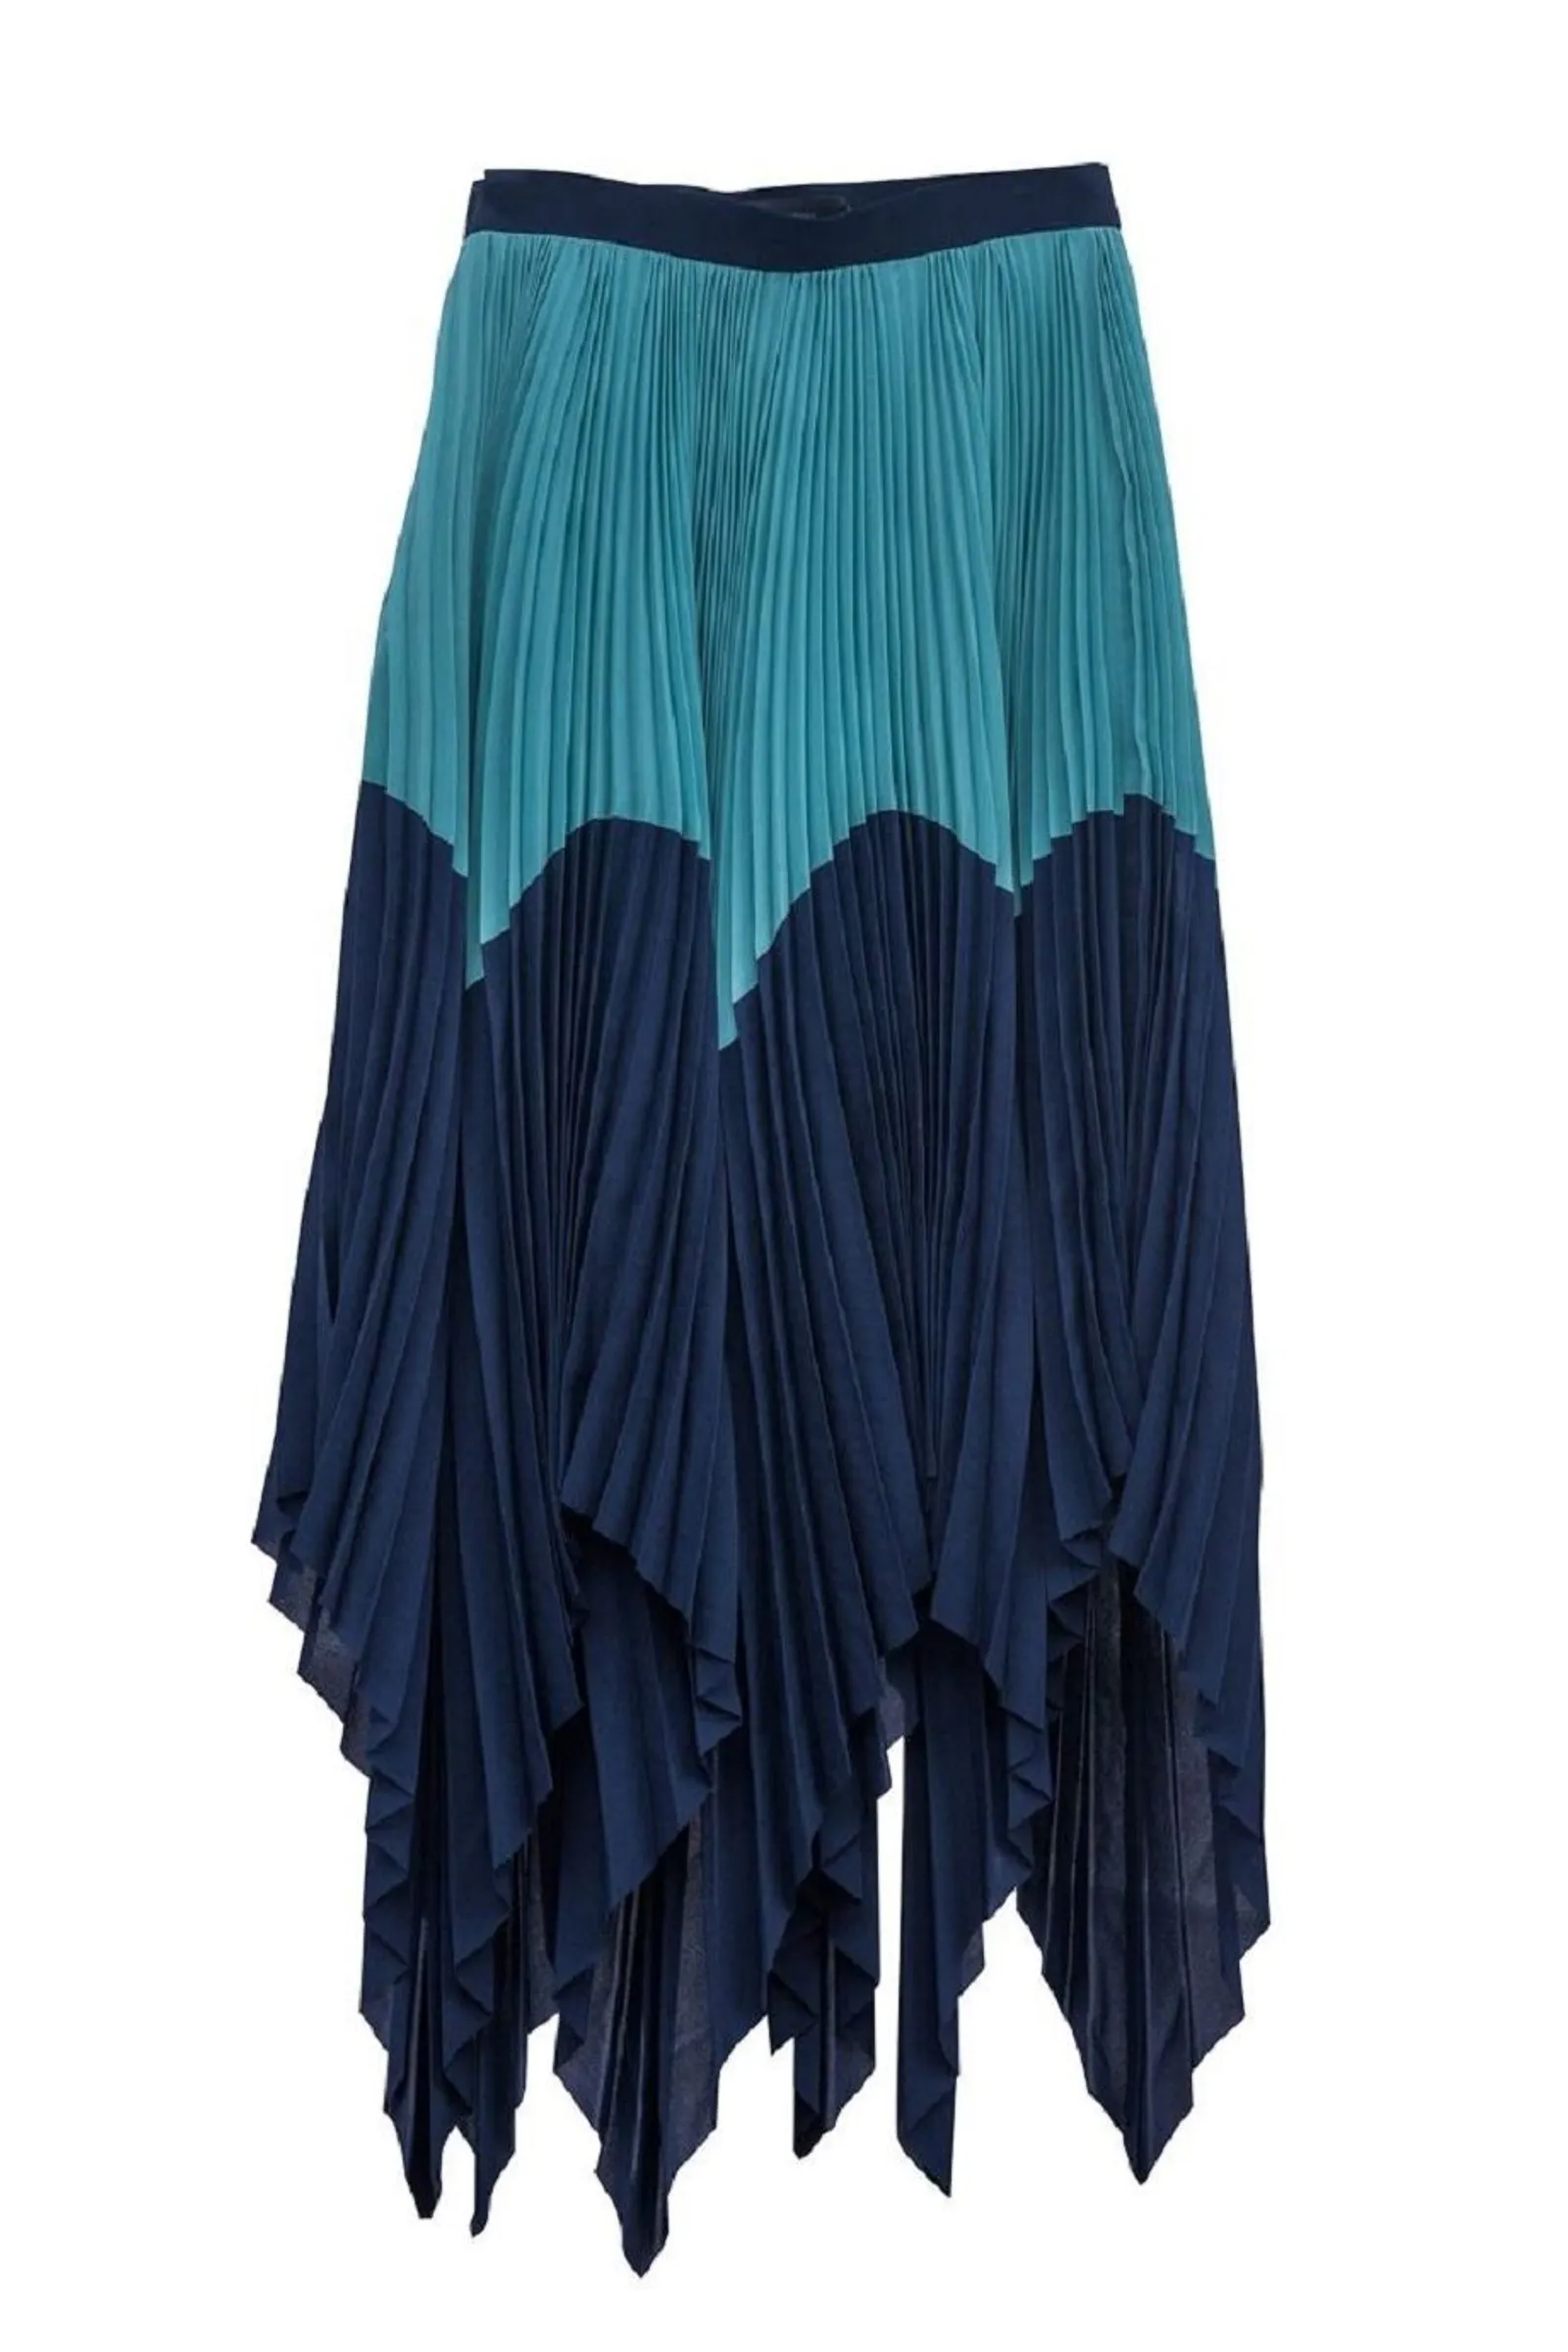 #PopbelaOOTD: Rekomendasi Pleated Skirt Terbaru untuk Gaya yang Chic